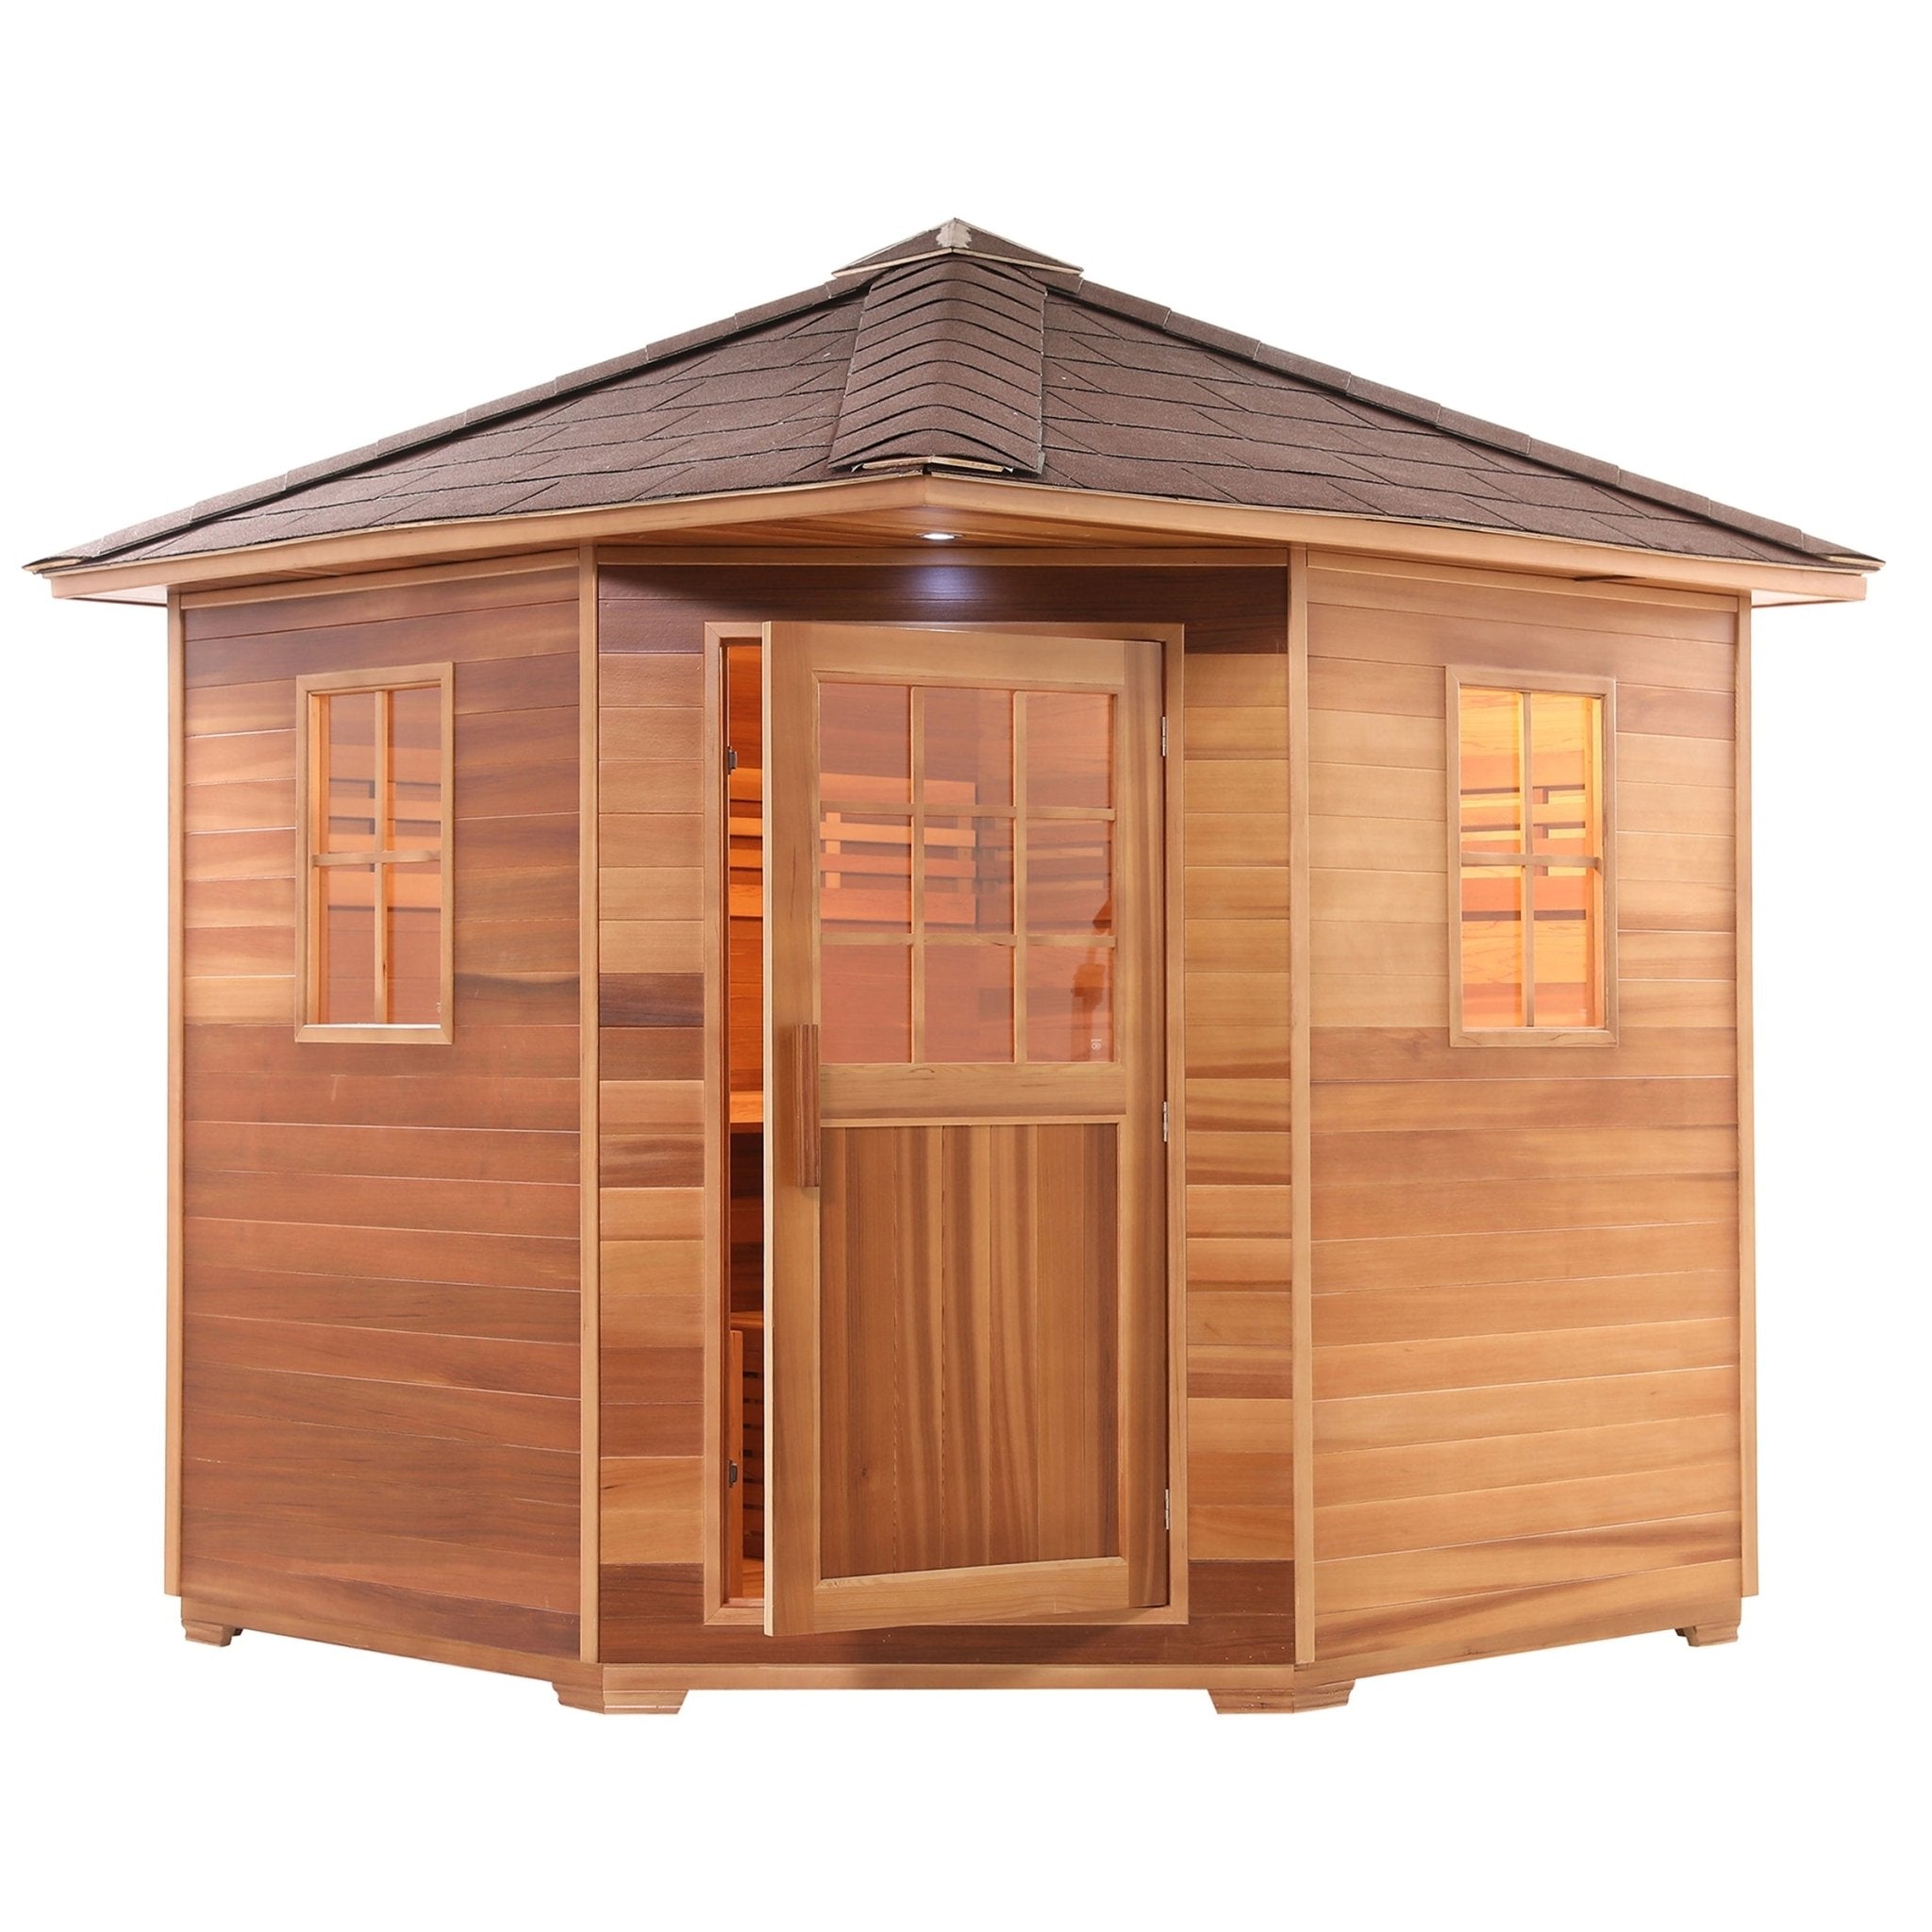 Aleko Canadian Cedar Wet Dry Outdoor Sauna with Asphalt Roof SKD8RCED-AP - The Sauna World